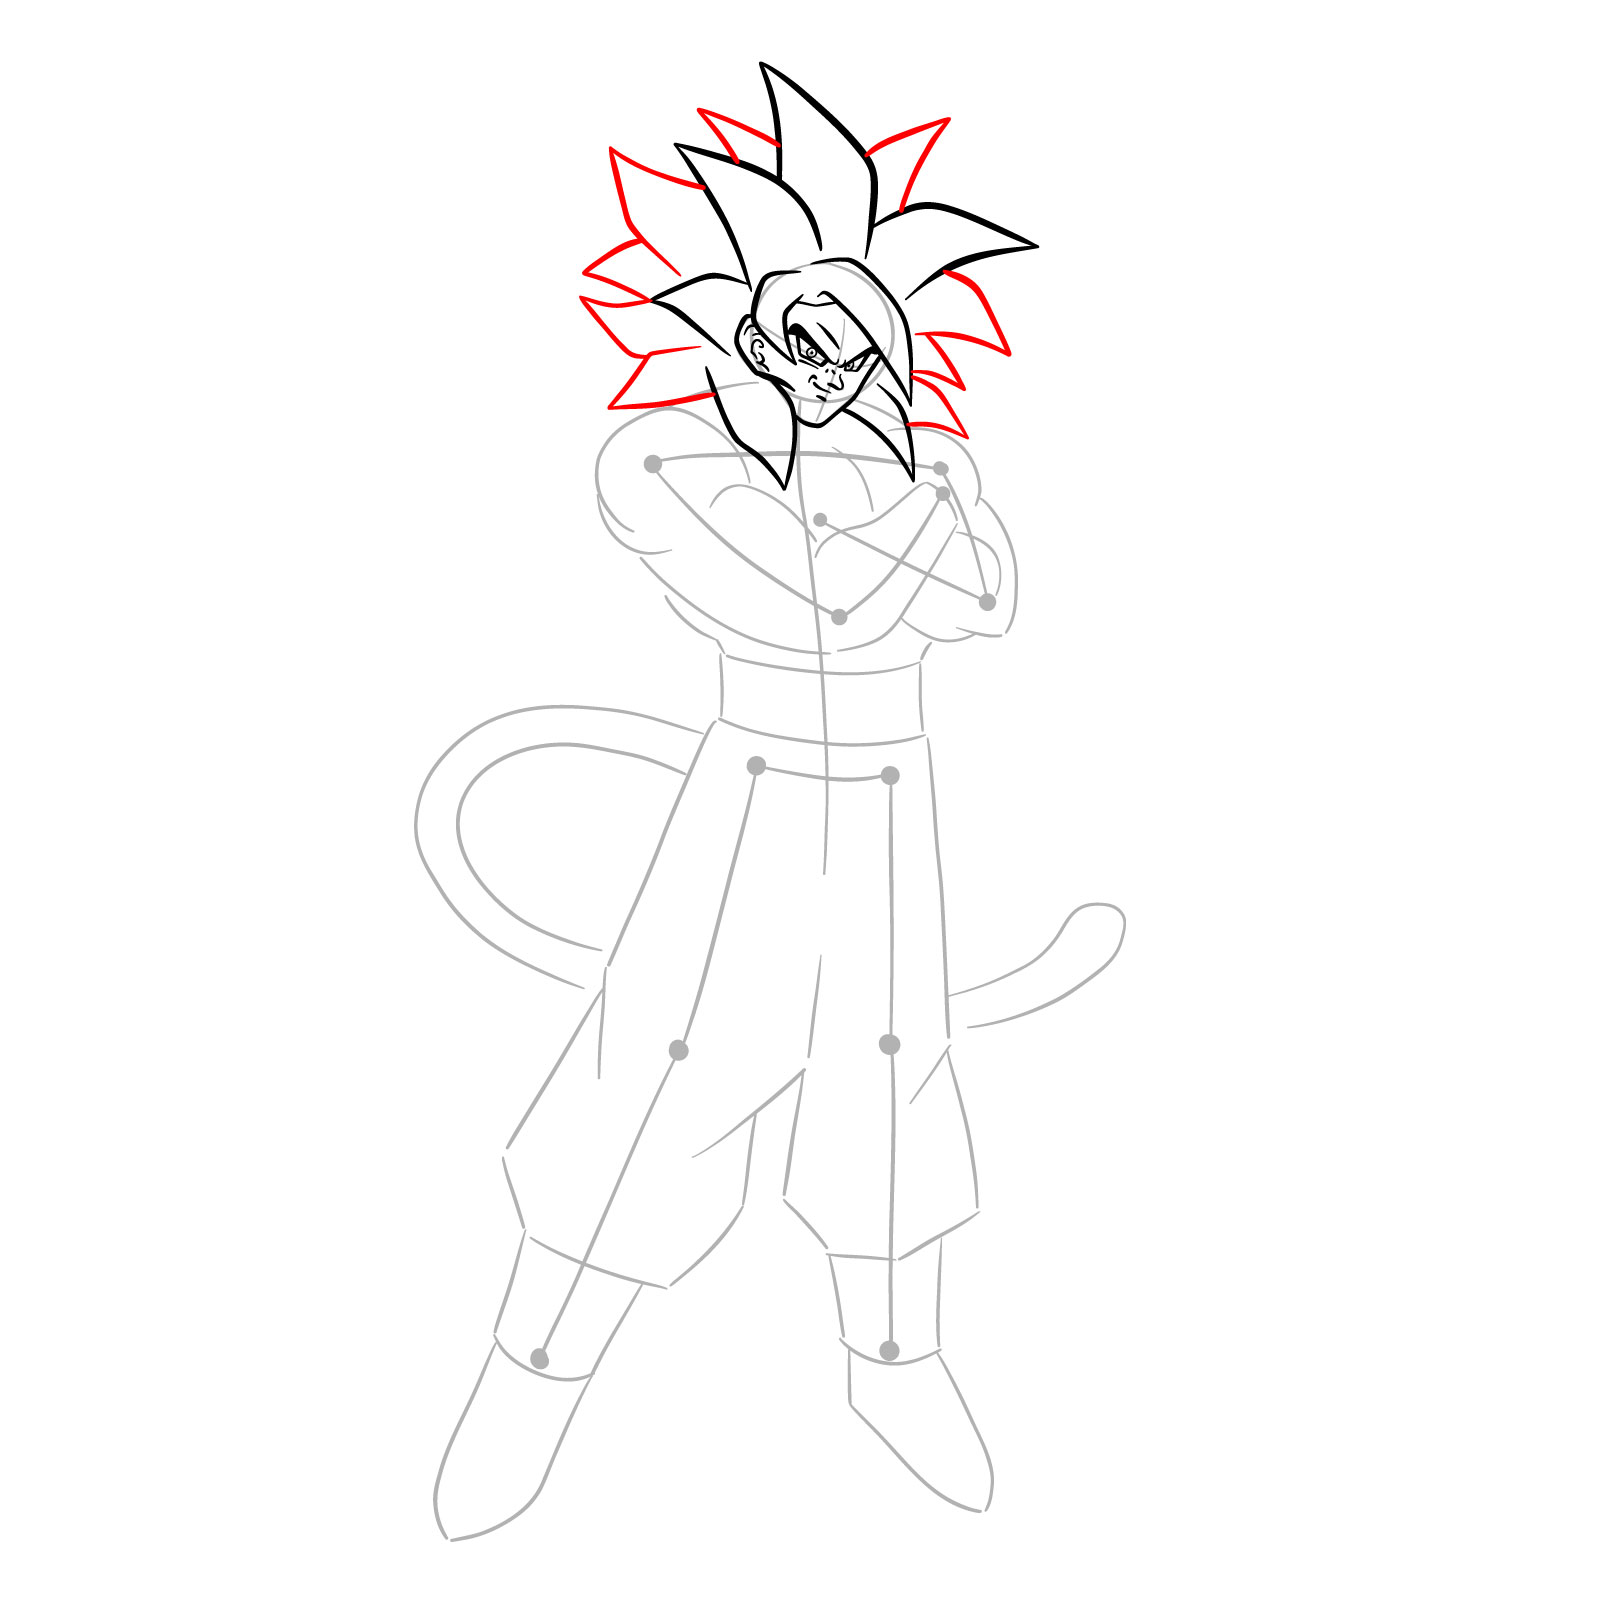 How to tát draw Goku Super Saiyan 4 - step 13